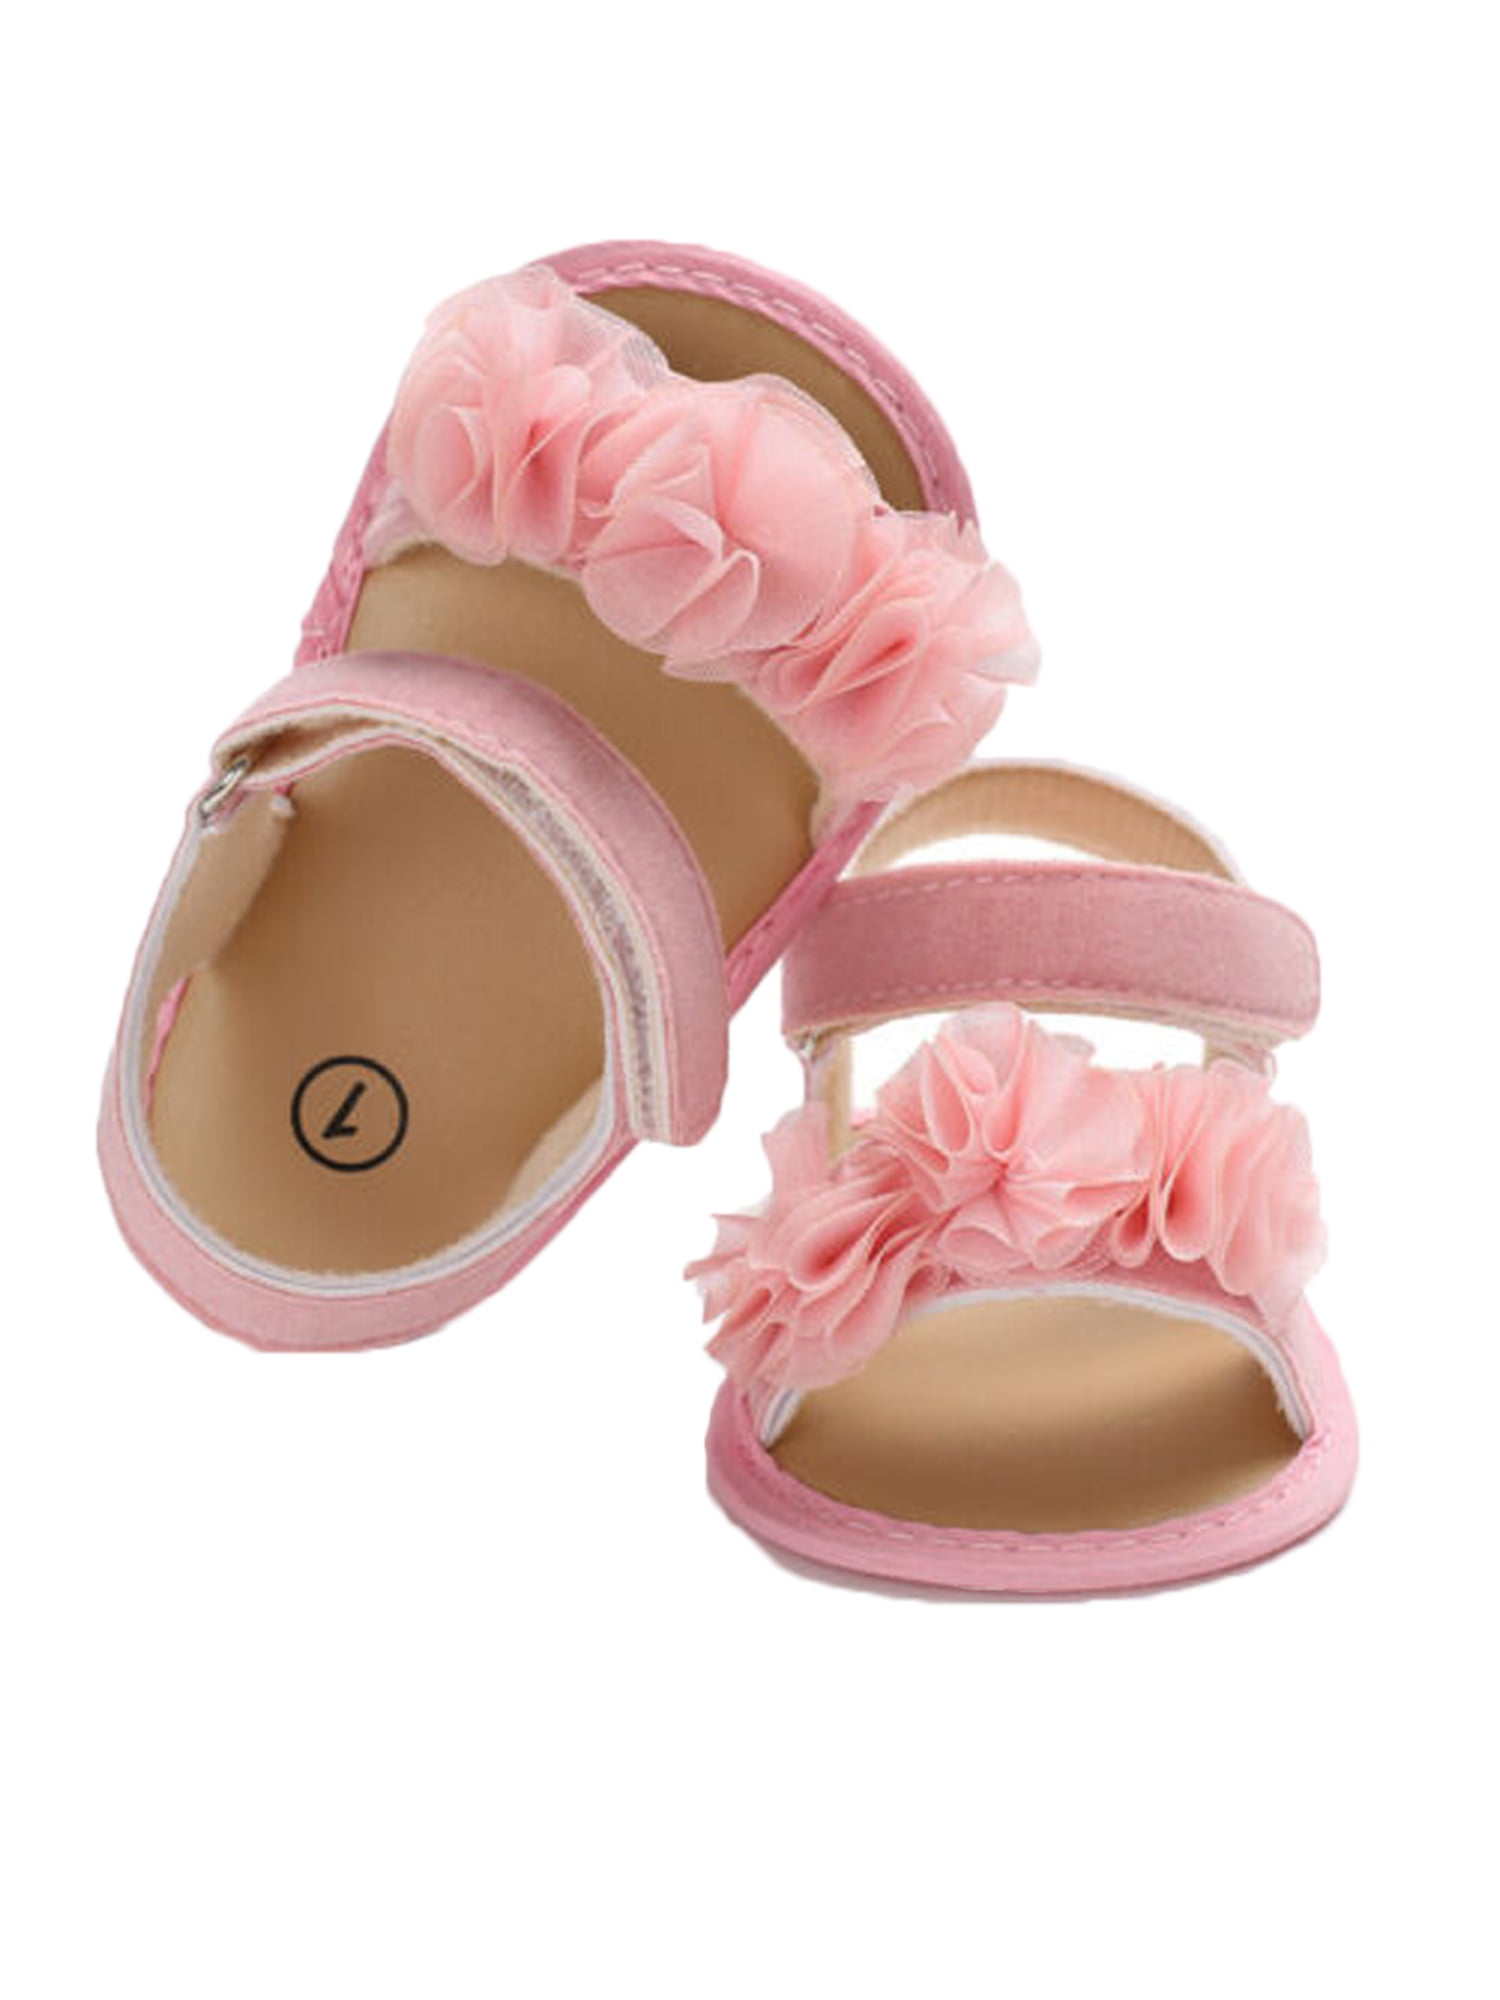 Iusun Sandles Infant Baby Girls Soft Sole Anti-Slip Crib Shoes Toddler Shoes